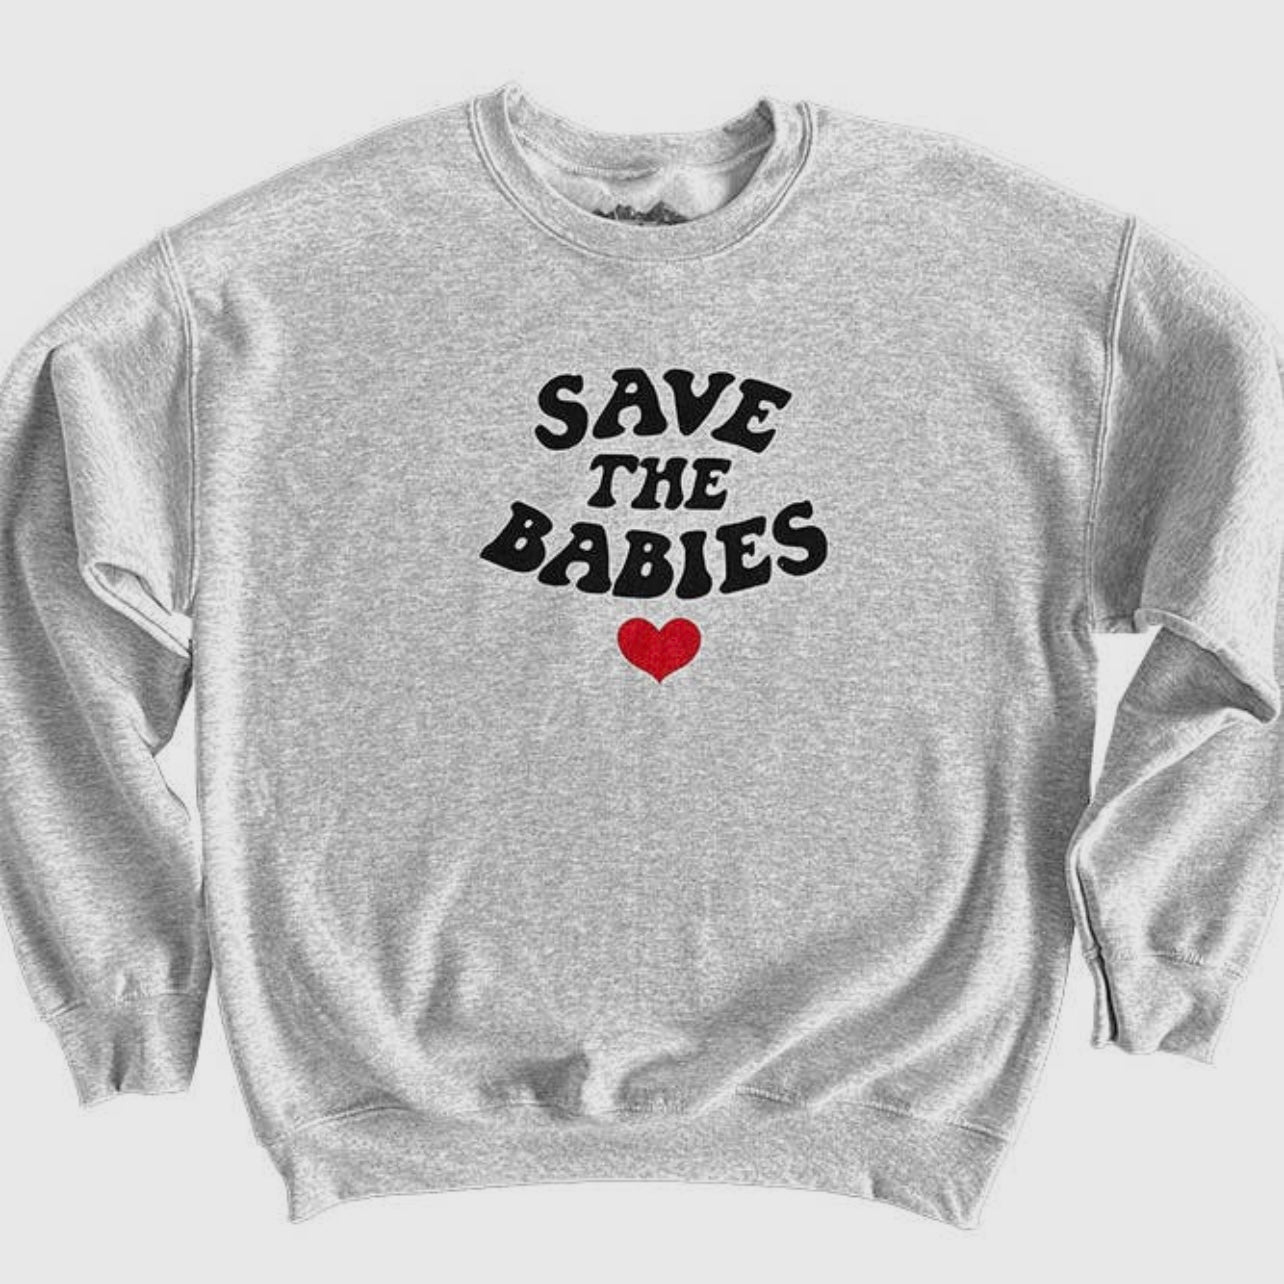 Save the Babies Sweatshirt